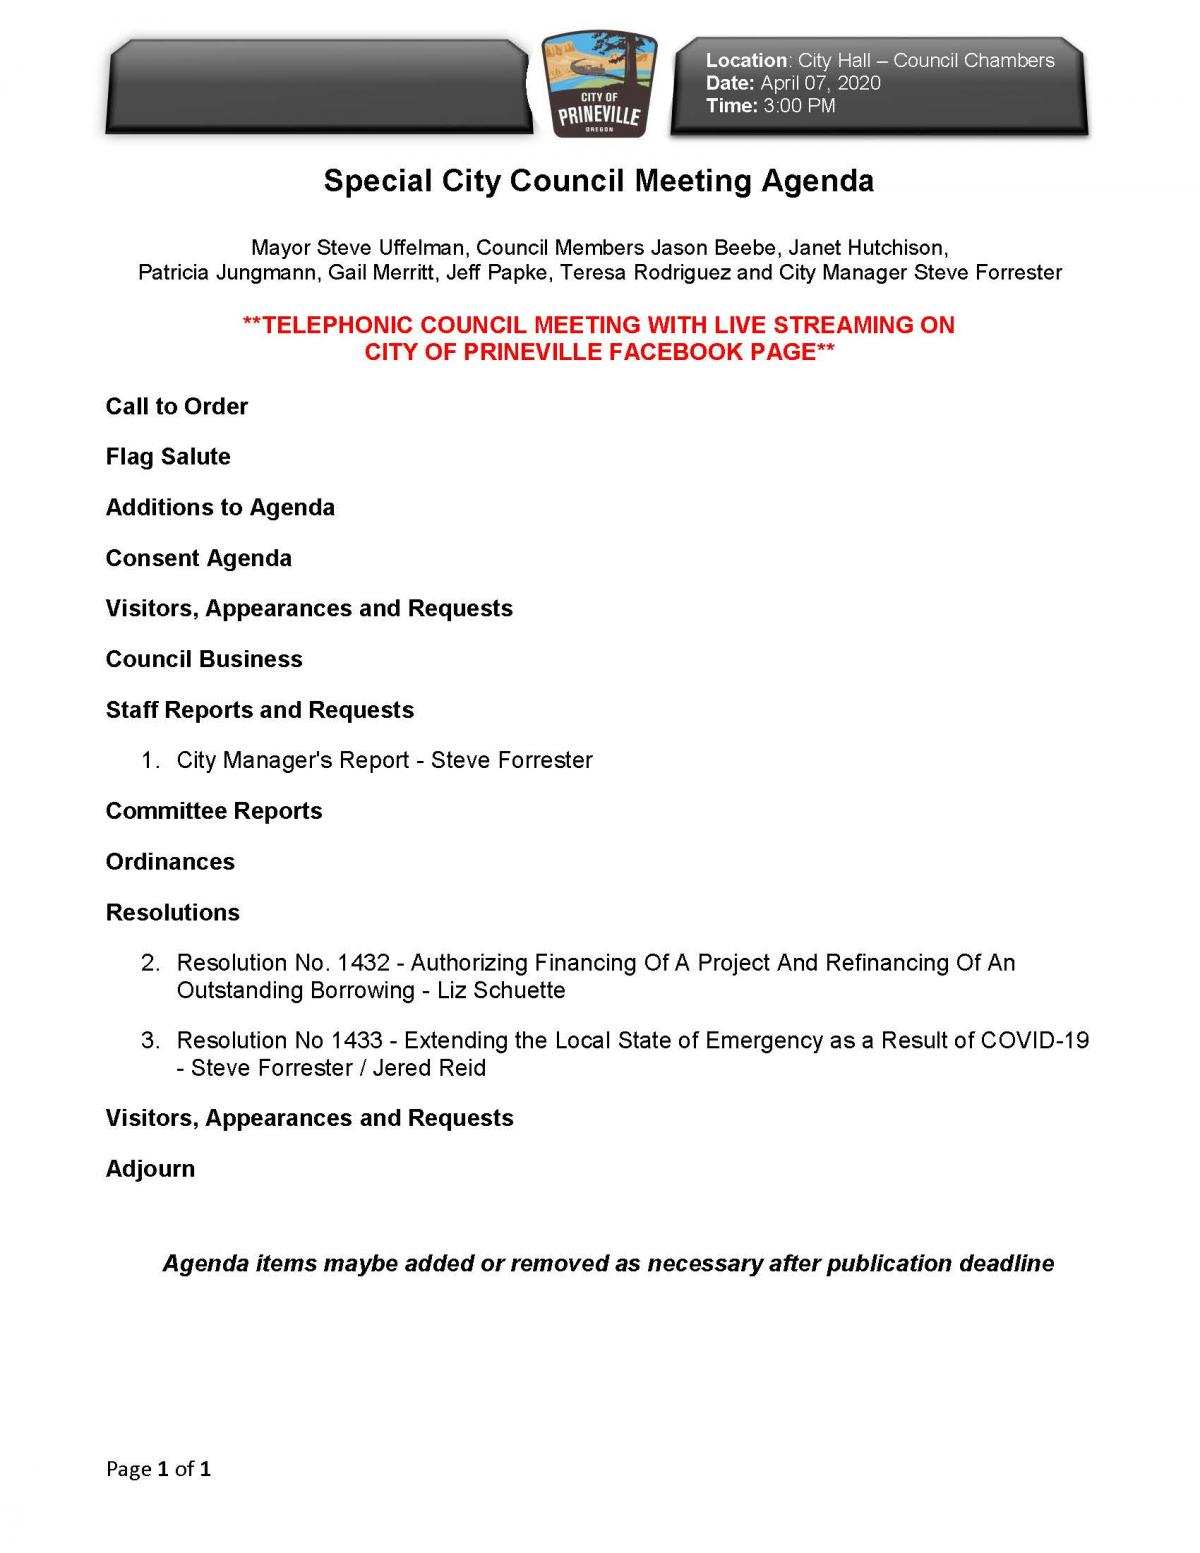 Special Council Meeting Agenda 4-7-2020